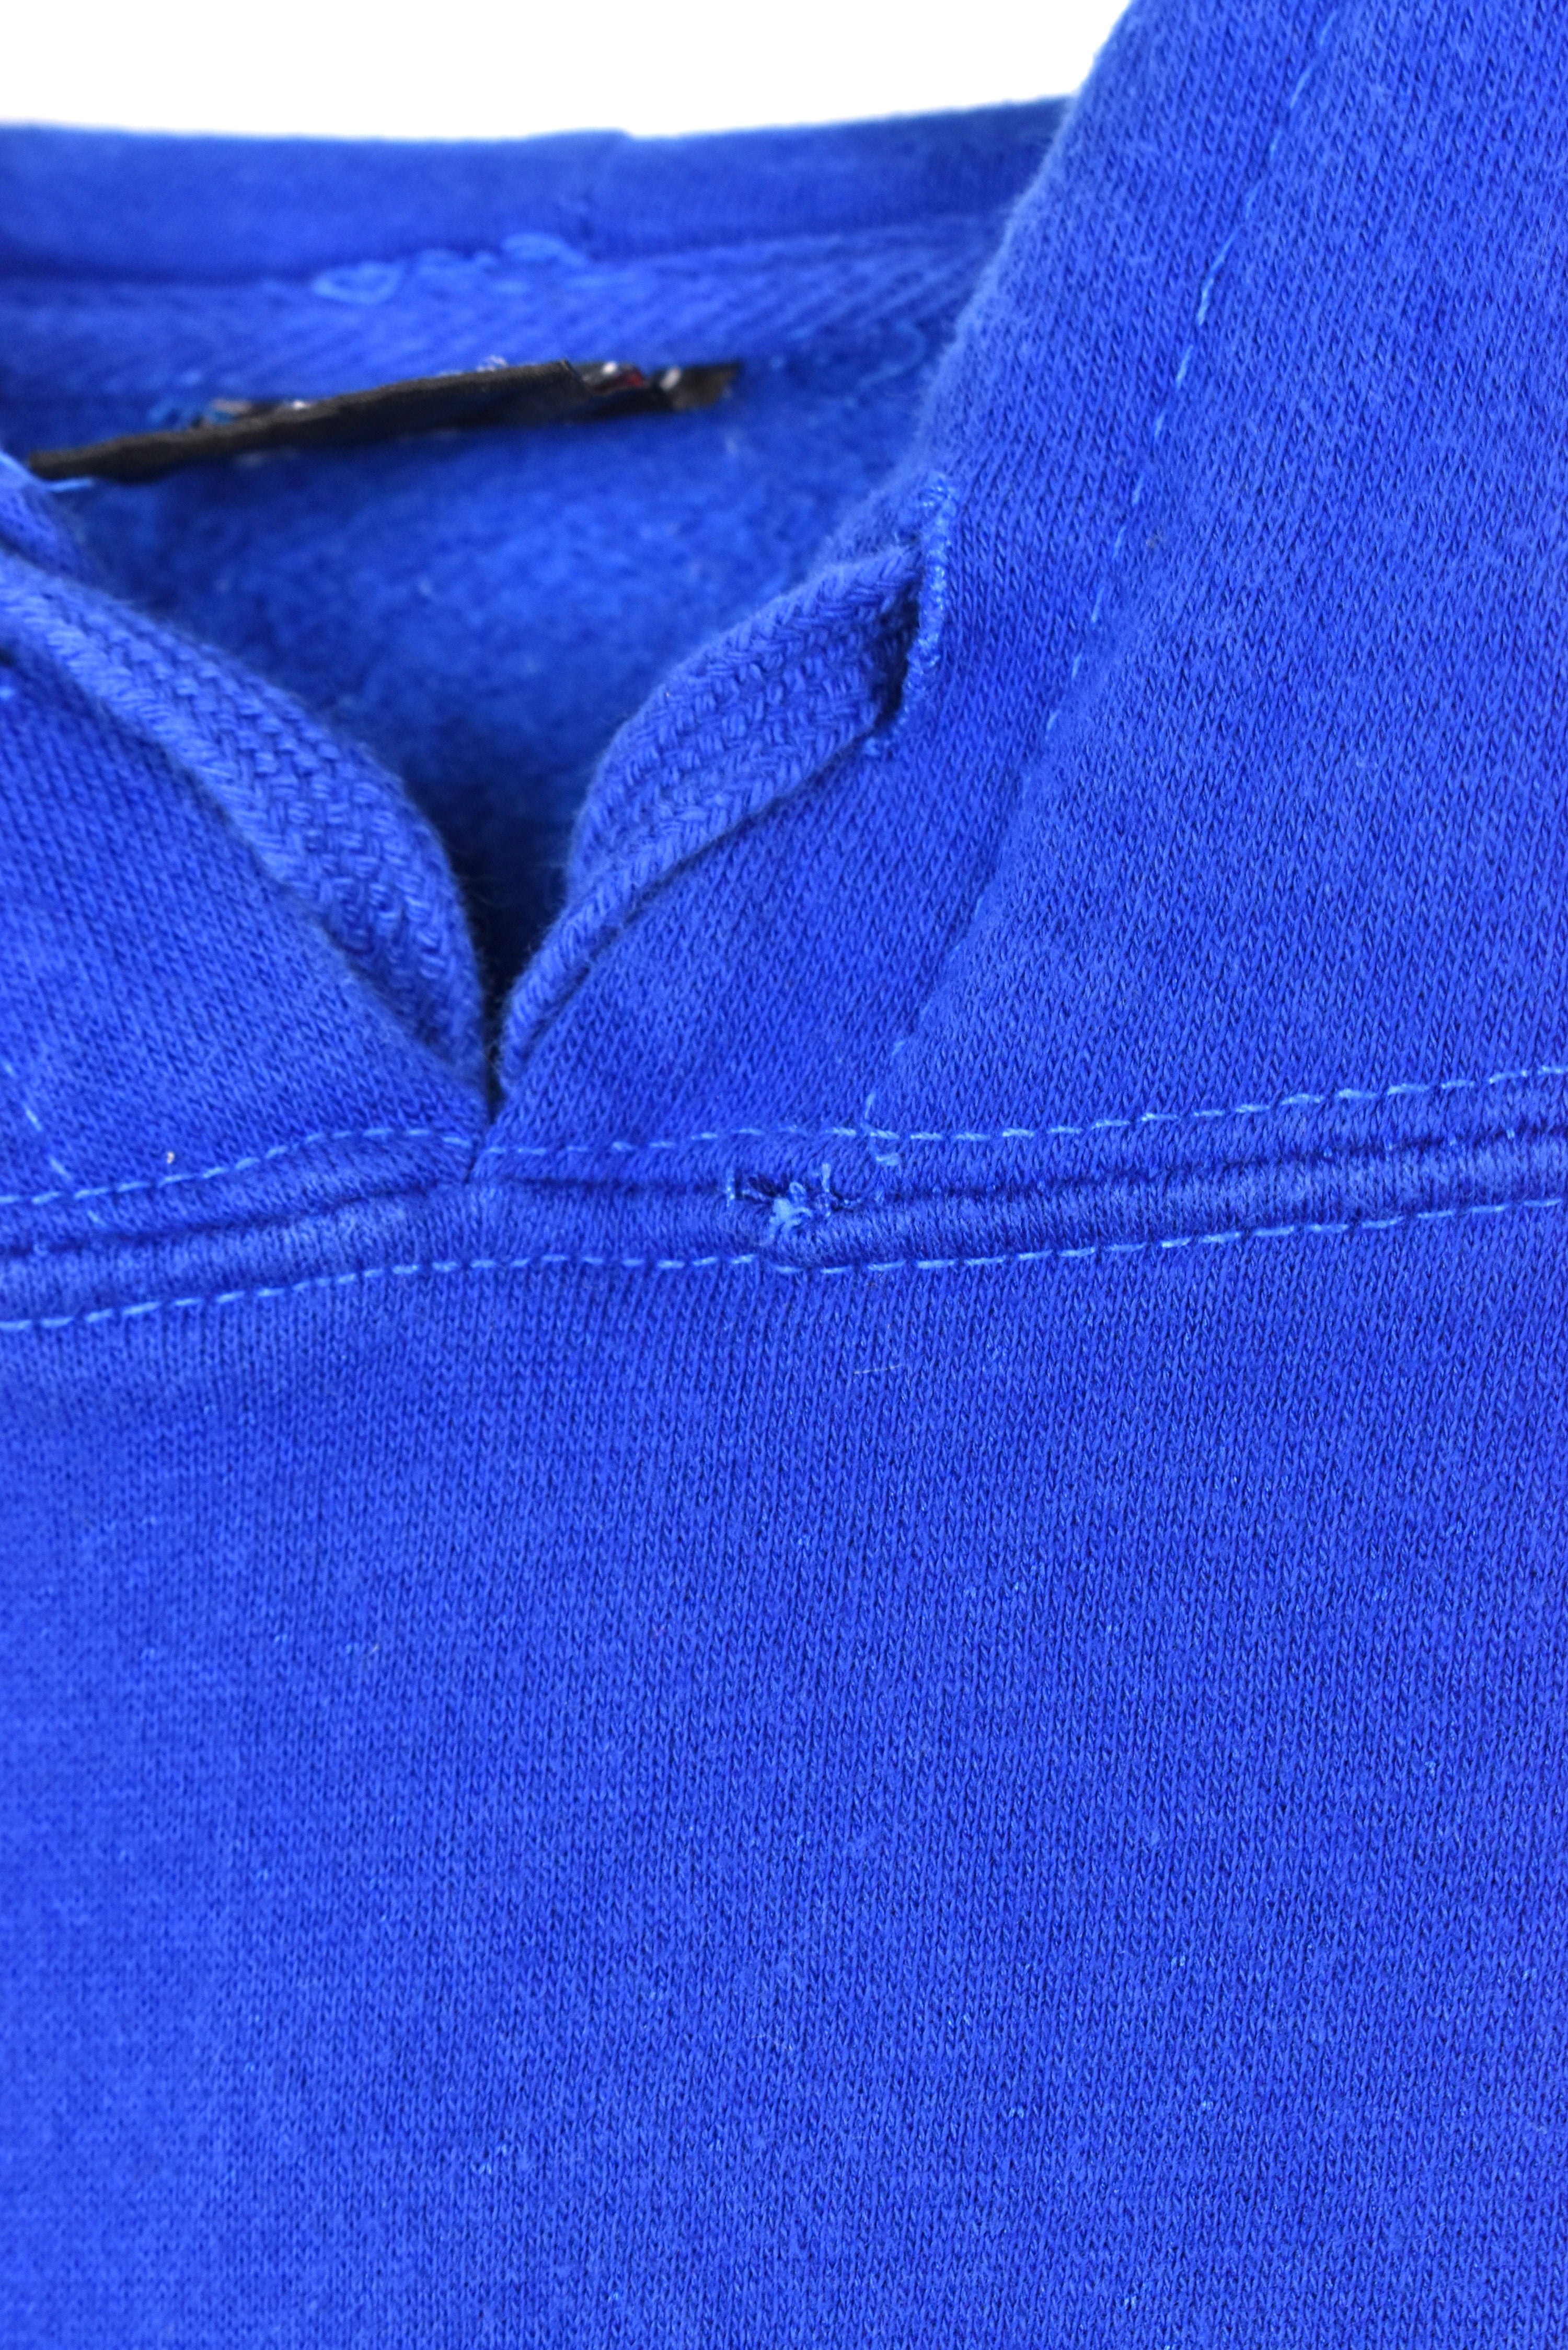 Vintage University of Kentucky hoodie, blue embroidered sweatshirt - AU XL COLLEGE